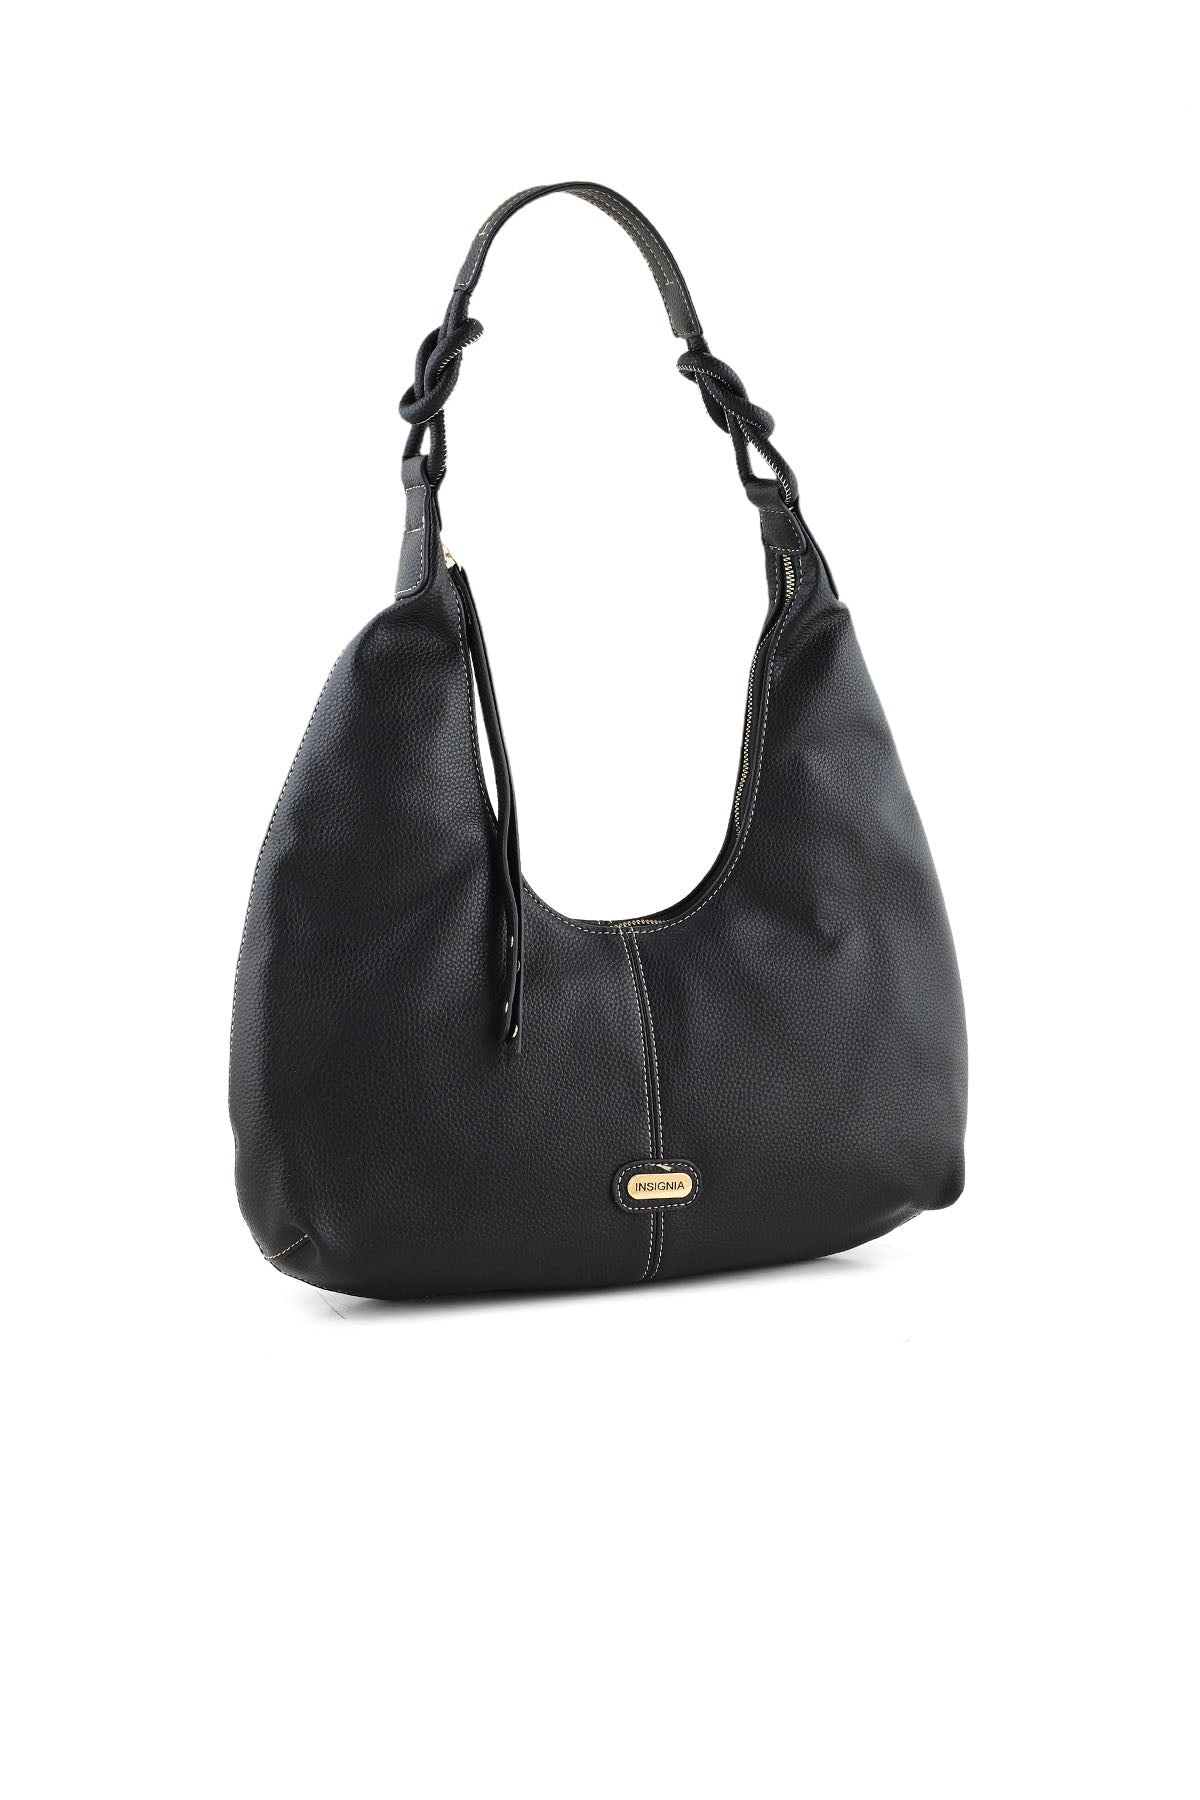 Hobo Hand Bags B15022-Black